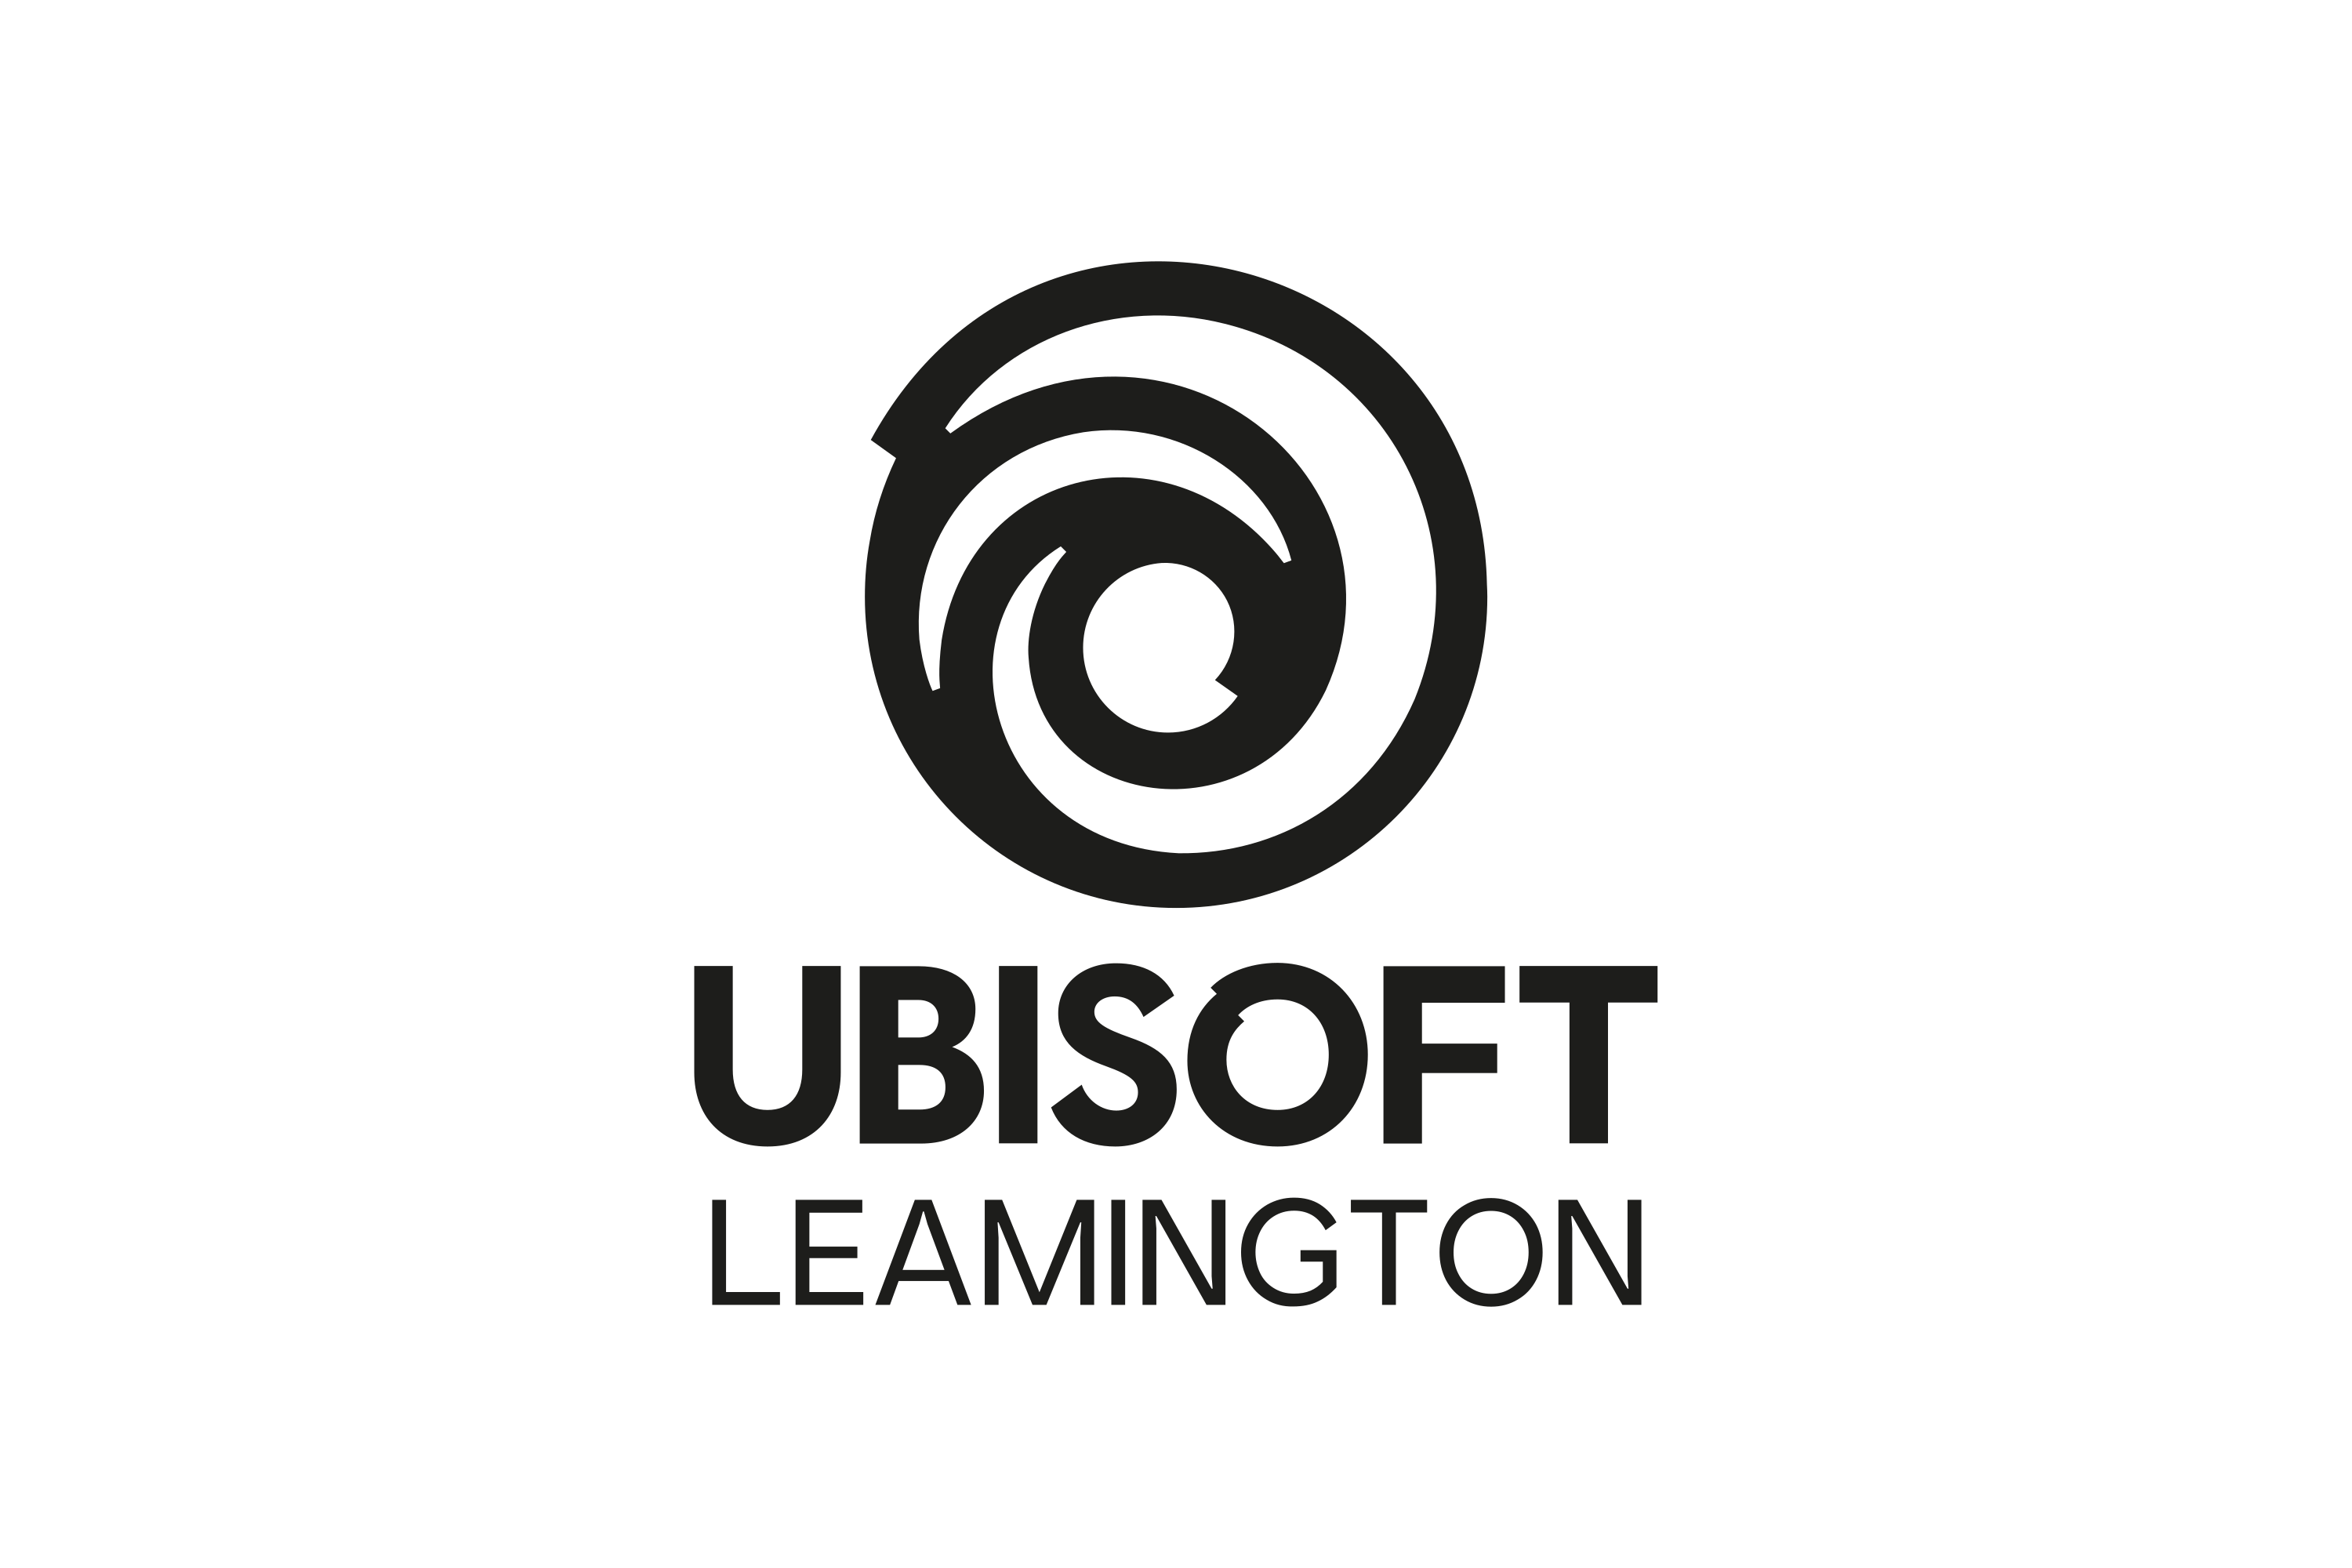 Ubisoft Leamington Logo